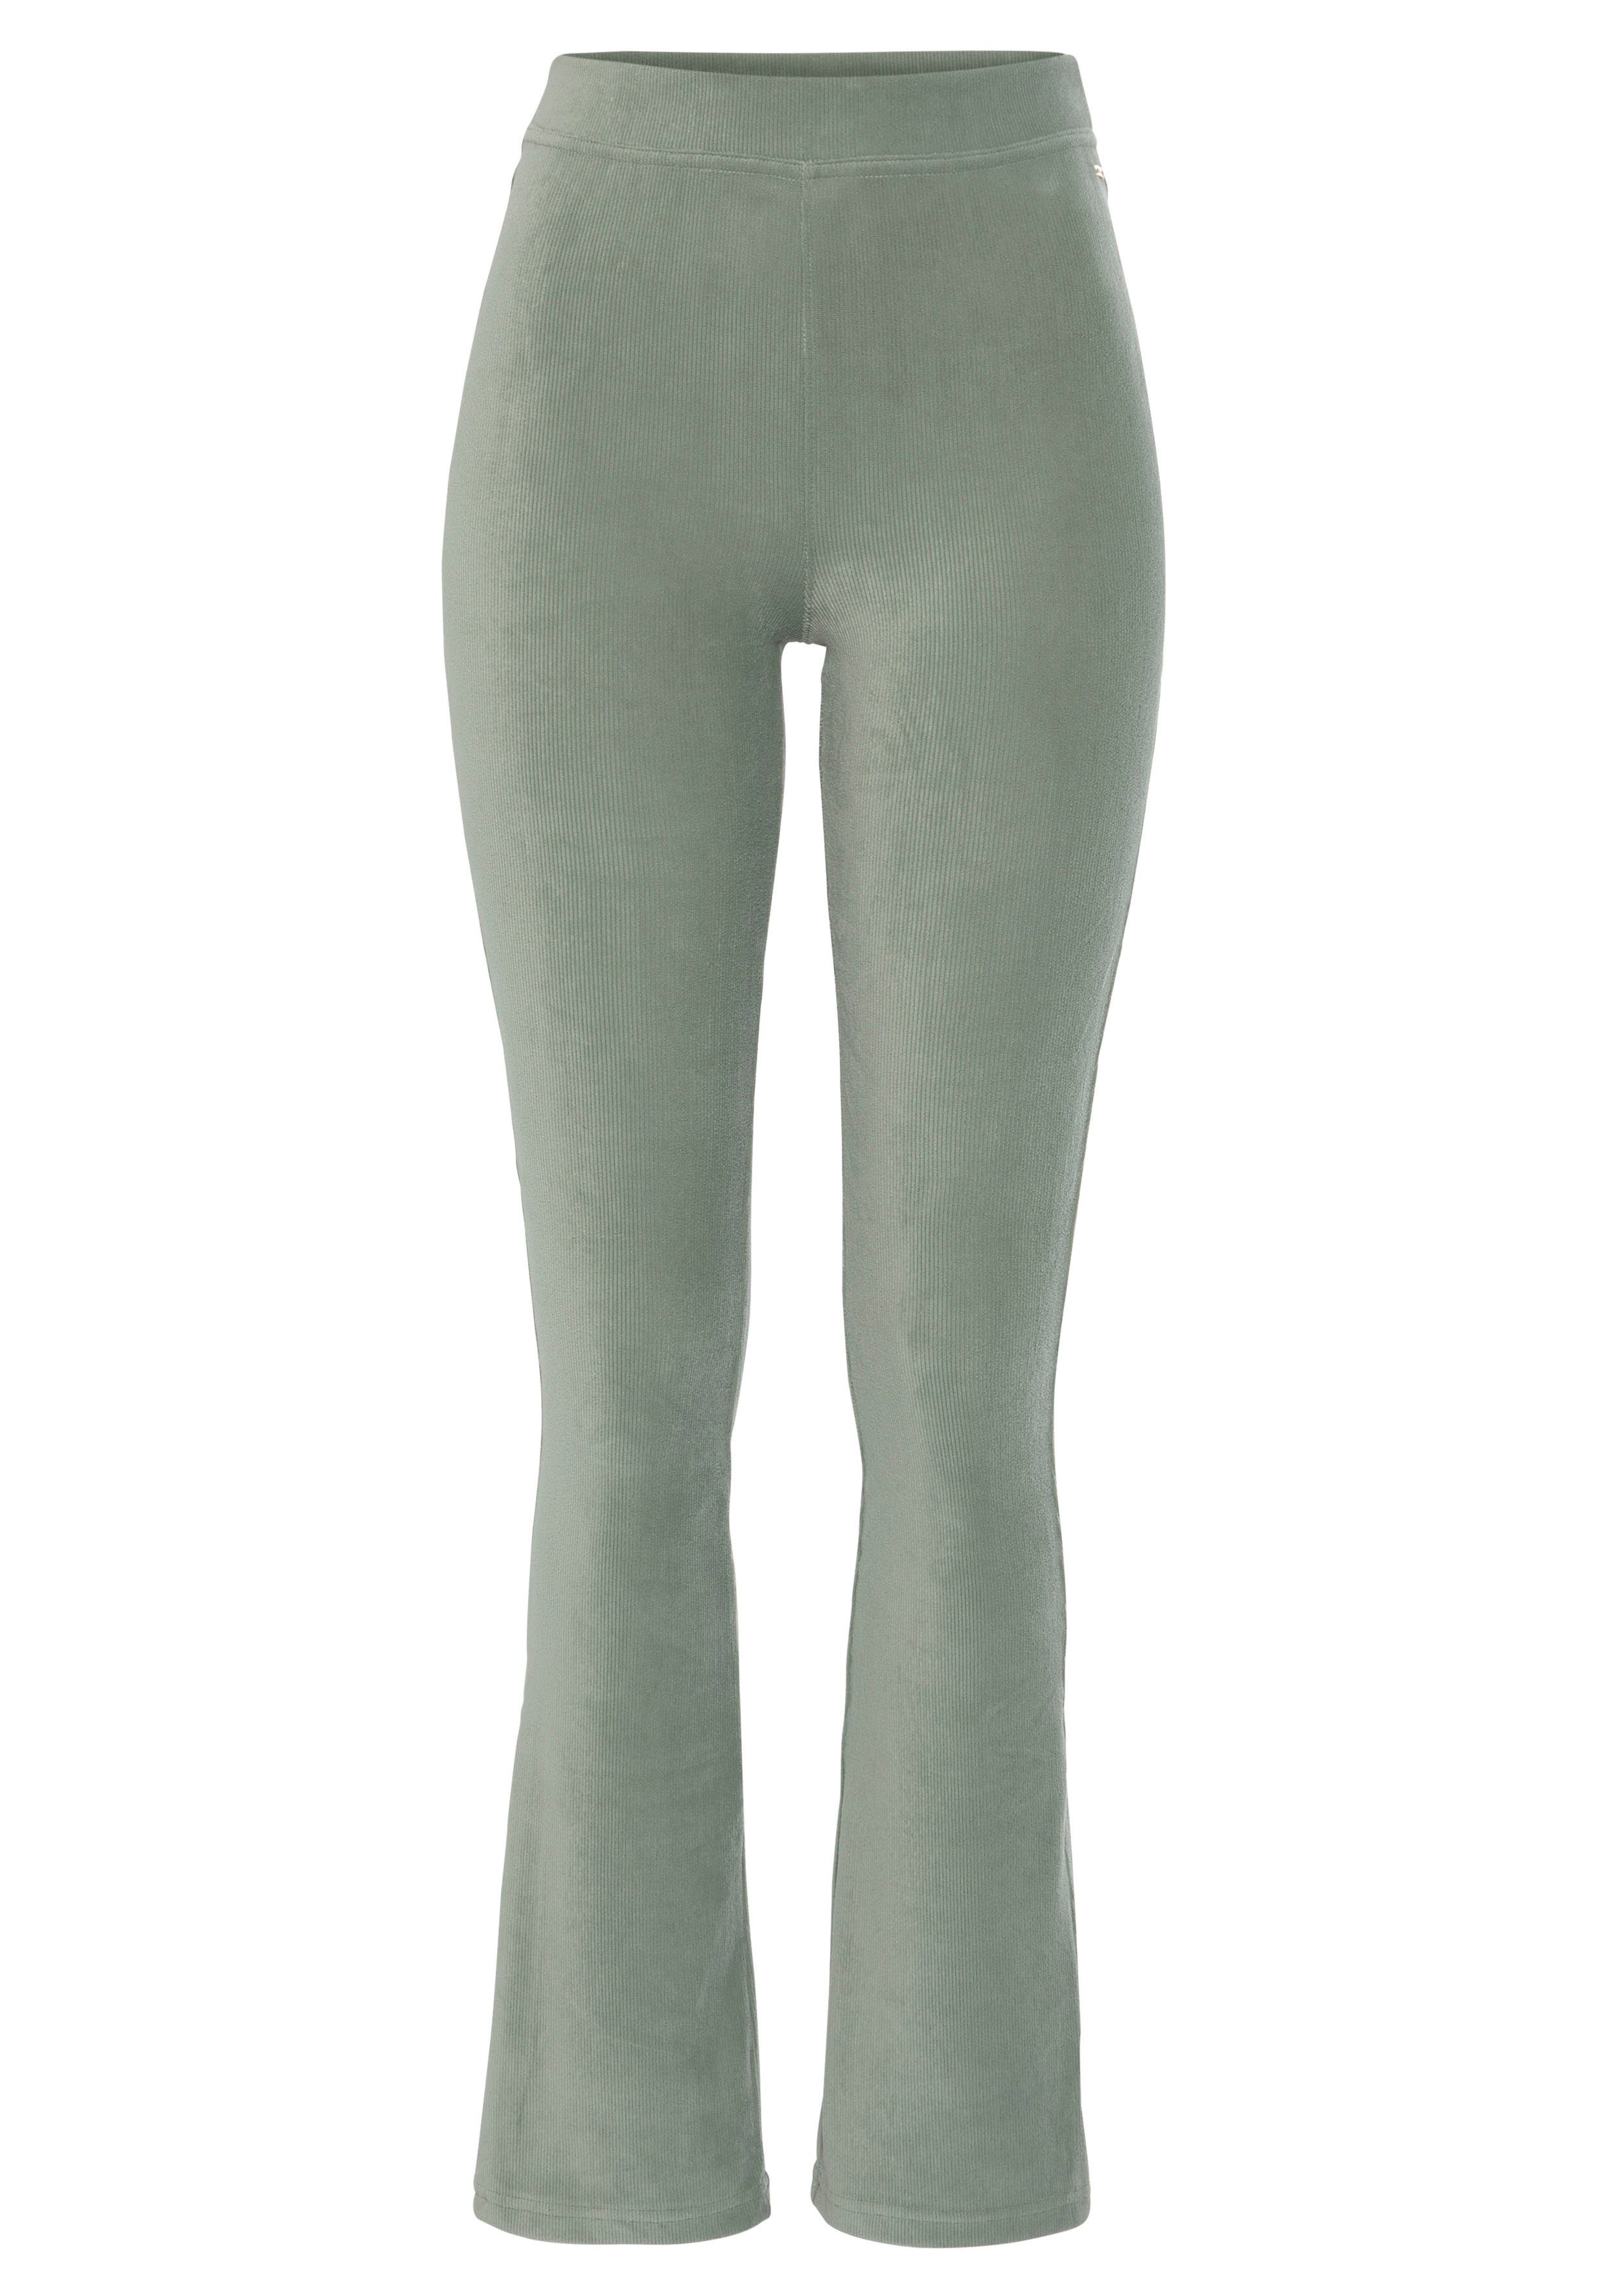 LASCANA Jazzpants mint aus Material Cord-Optik, in Loungewear grün weichem